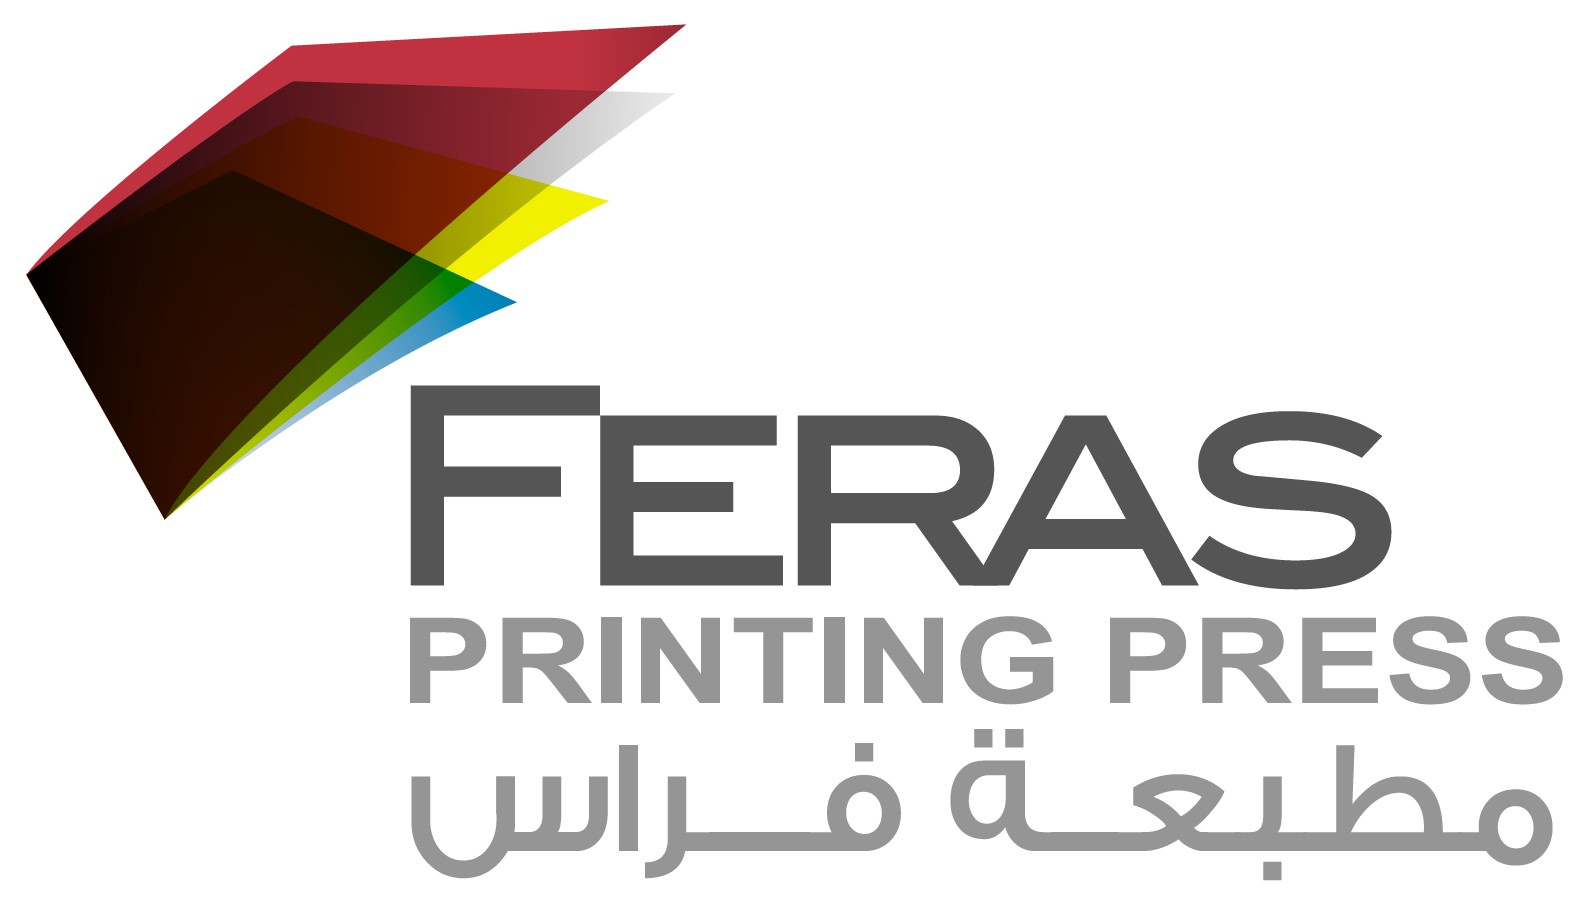 Feras printing press